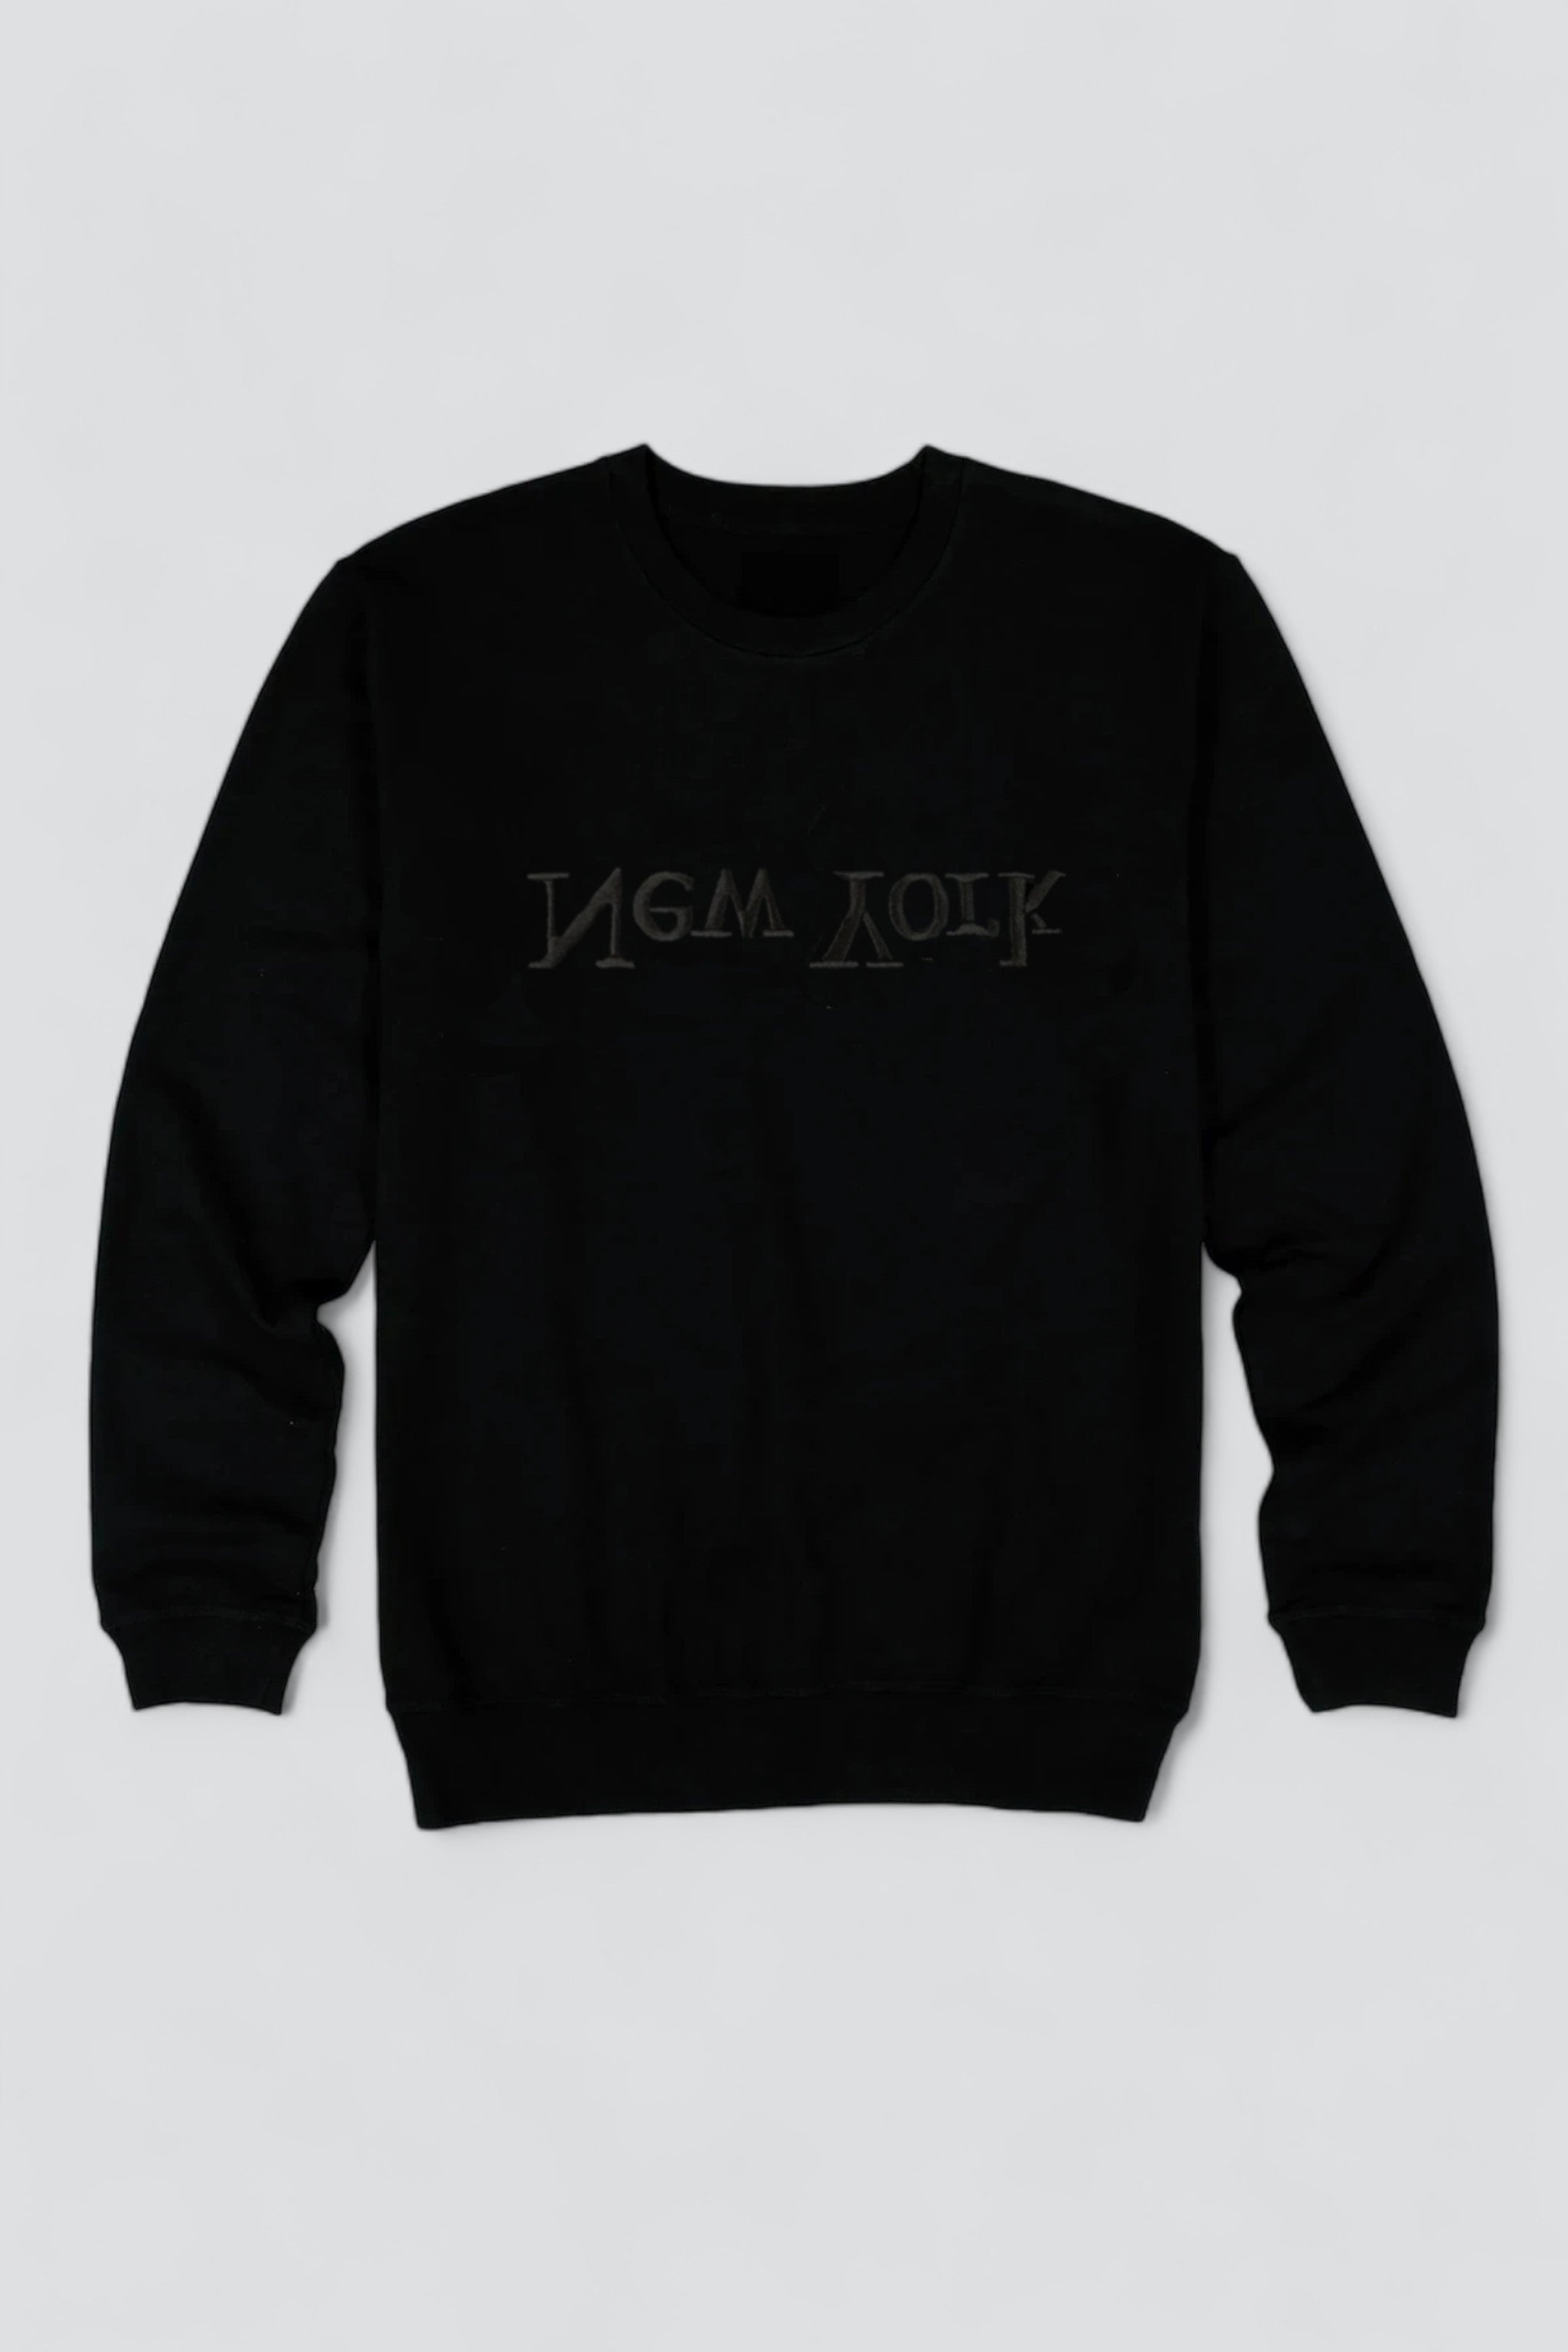 Black Embroidered New York Logo Sweatshirt